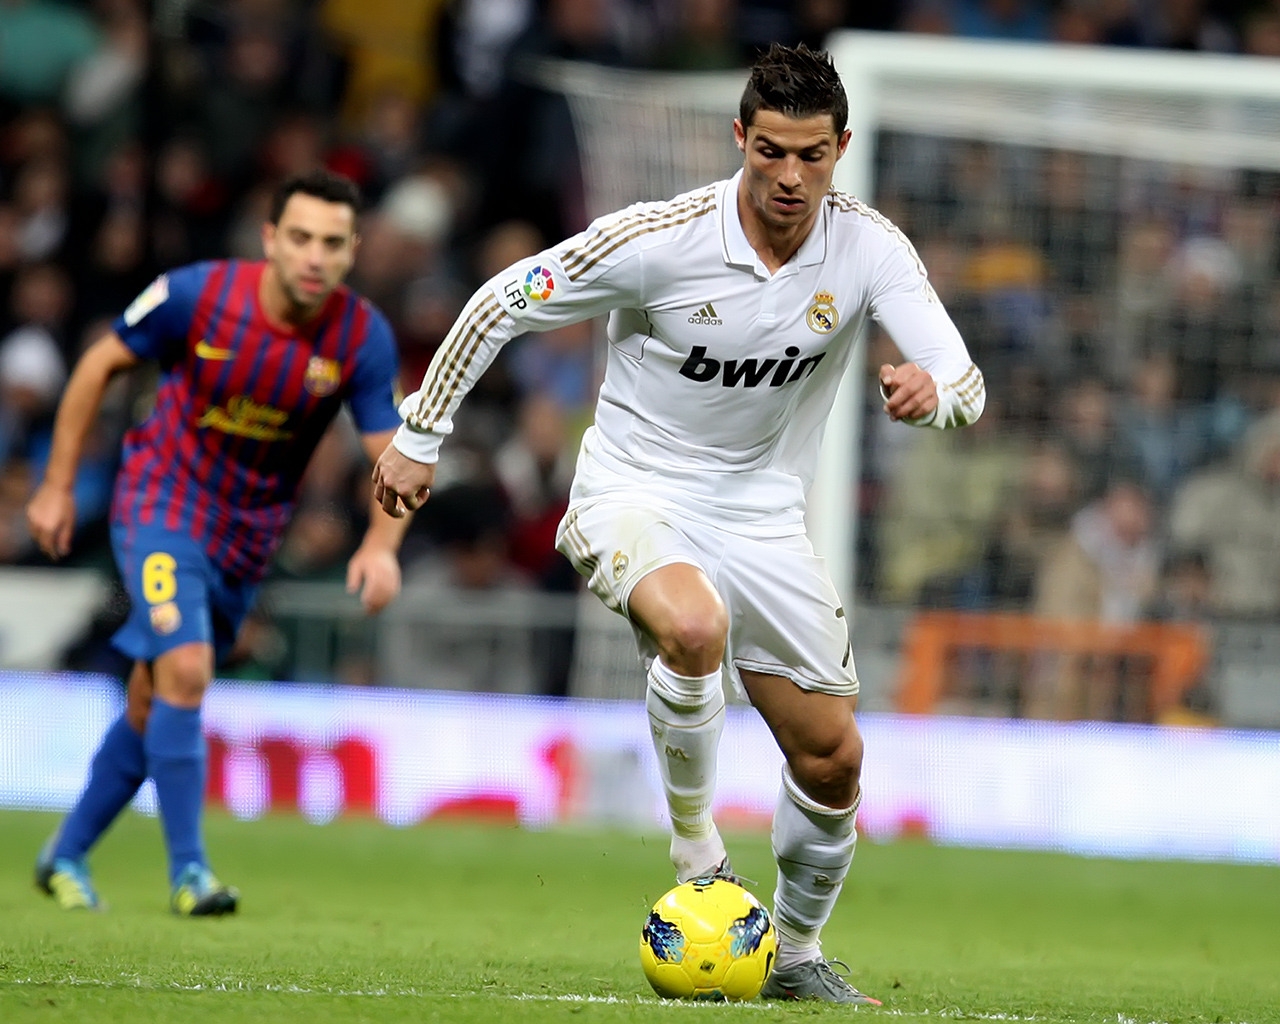 Cristiano Ronaldo Performing for 1280 x 1024 resolution